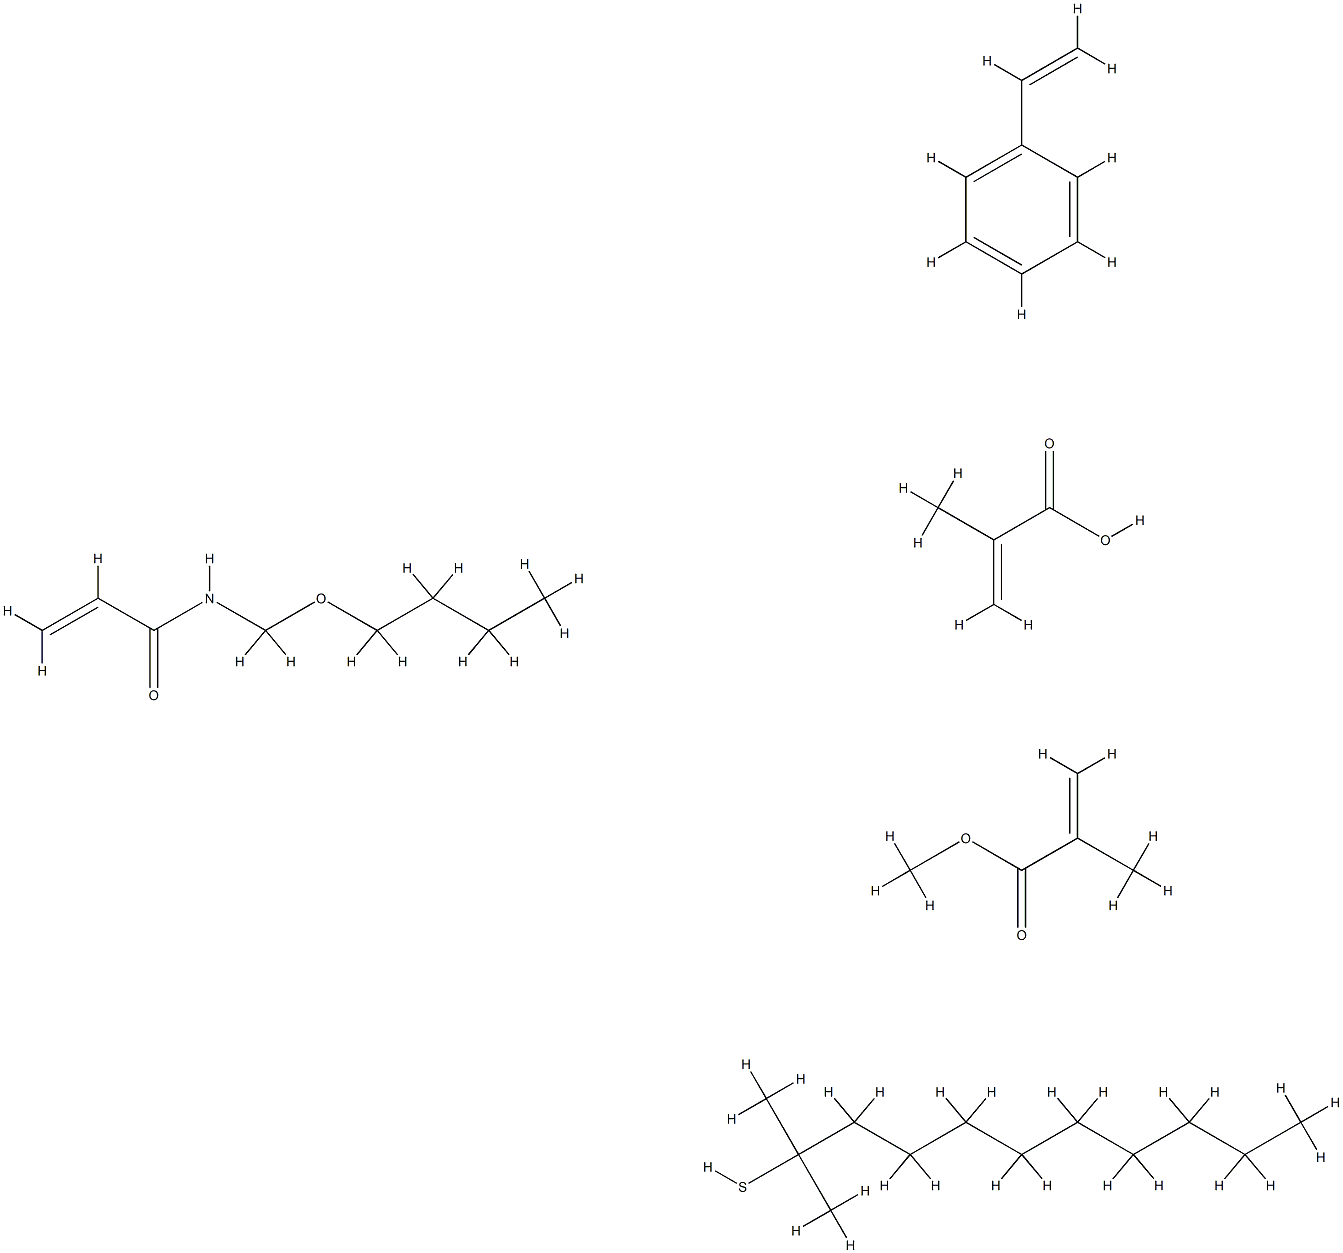 2-Propenoic acid, 2-methyl-, telomer with N-(butoxymethyl)-2-propenamide, tert-dodecanethiol, ethenylbenzene and methyl 2-methyl-2-propenoate|